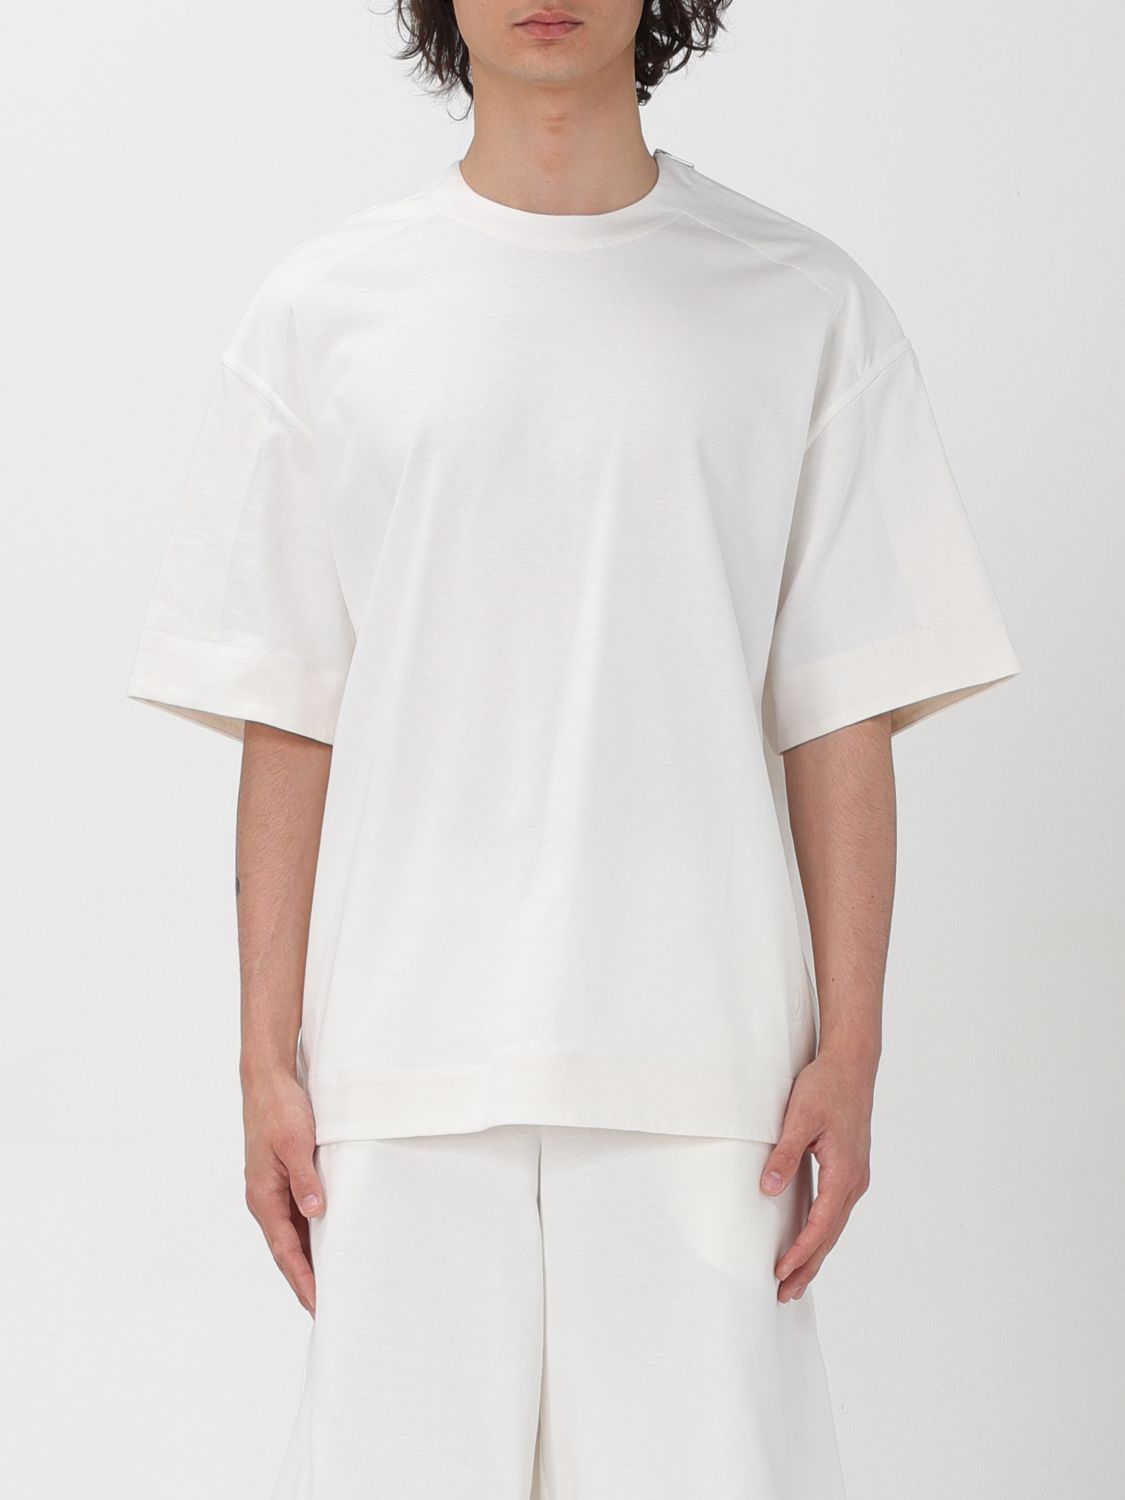 Shop Jil Sander T-shirt  Men Color White